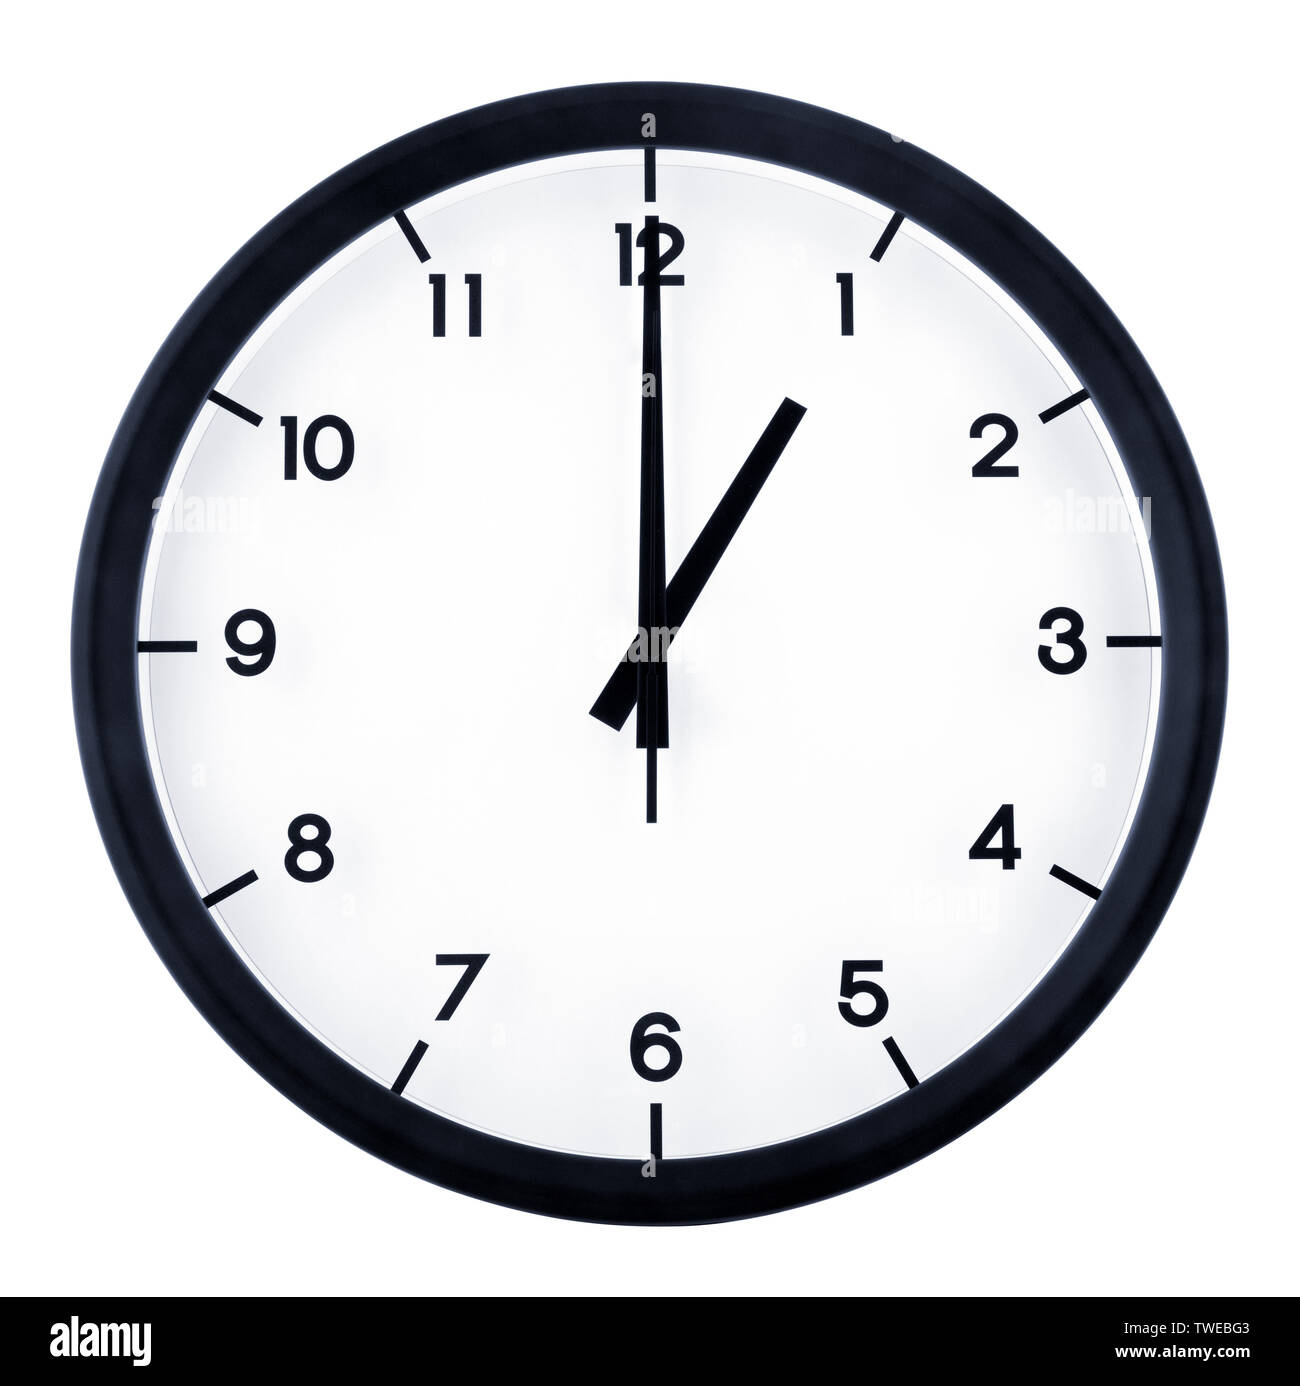 Reloj analógico clásico apuntando a 1 o'clock, aislado sobre fondo blanco  Fotografía de stock - Alamy